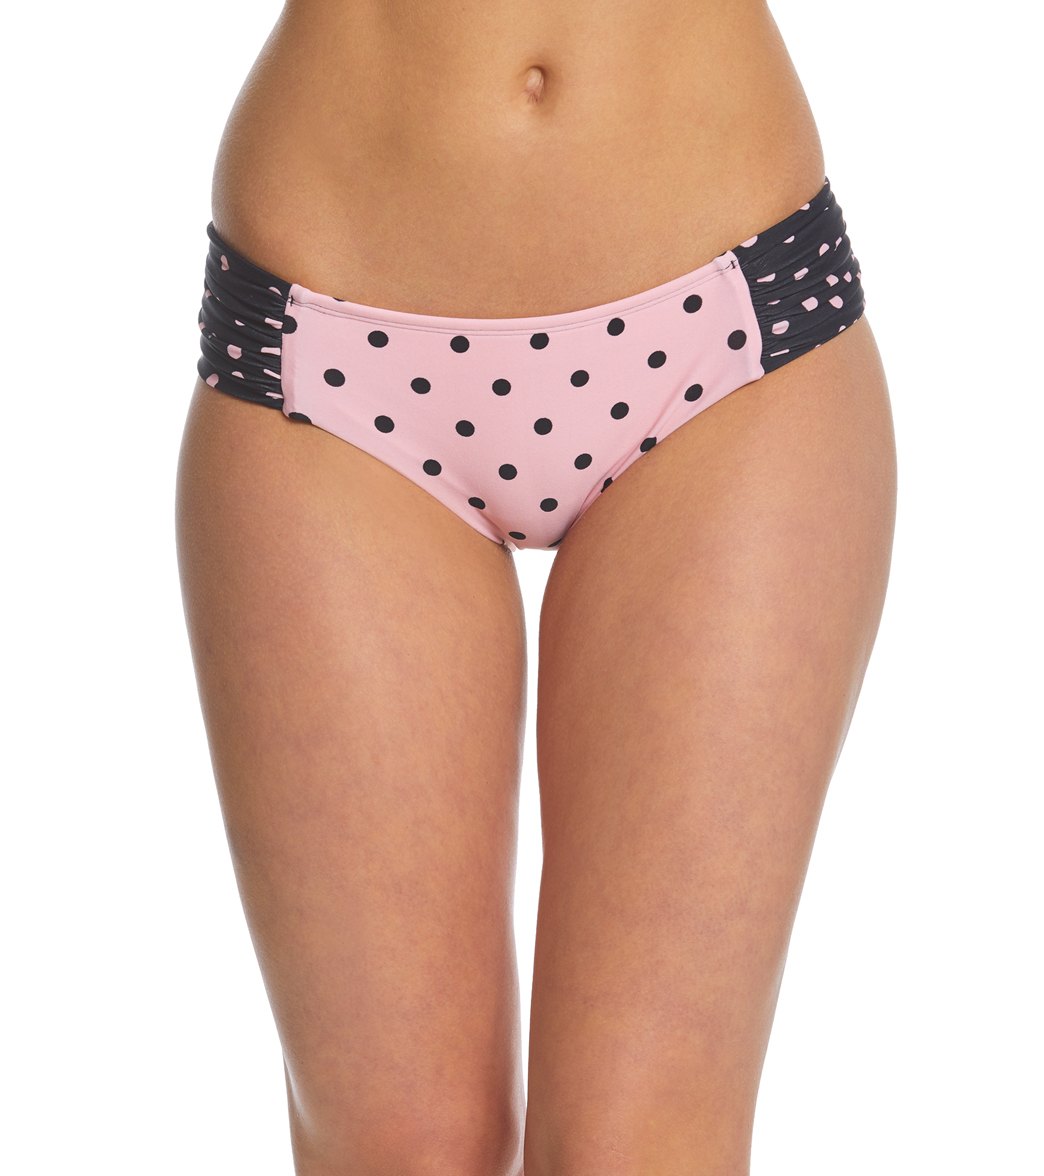 Betsey Johnson Dots For Sure Hipster Bikini Bottom - Pink/Black Small - Swimoutlet.com